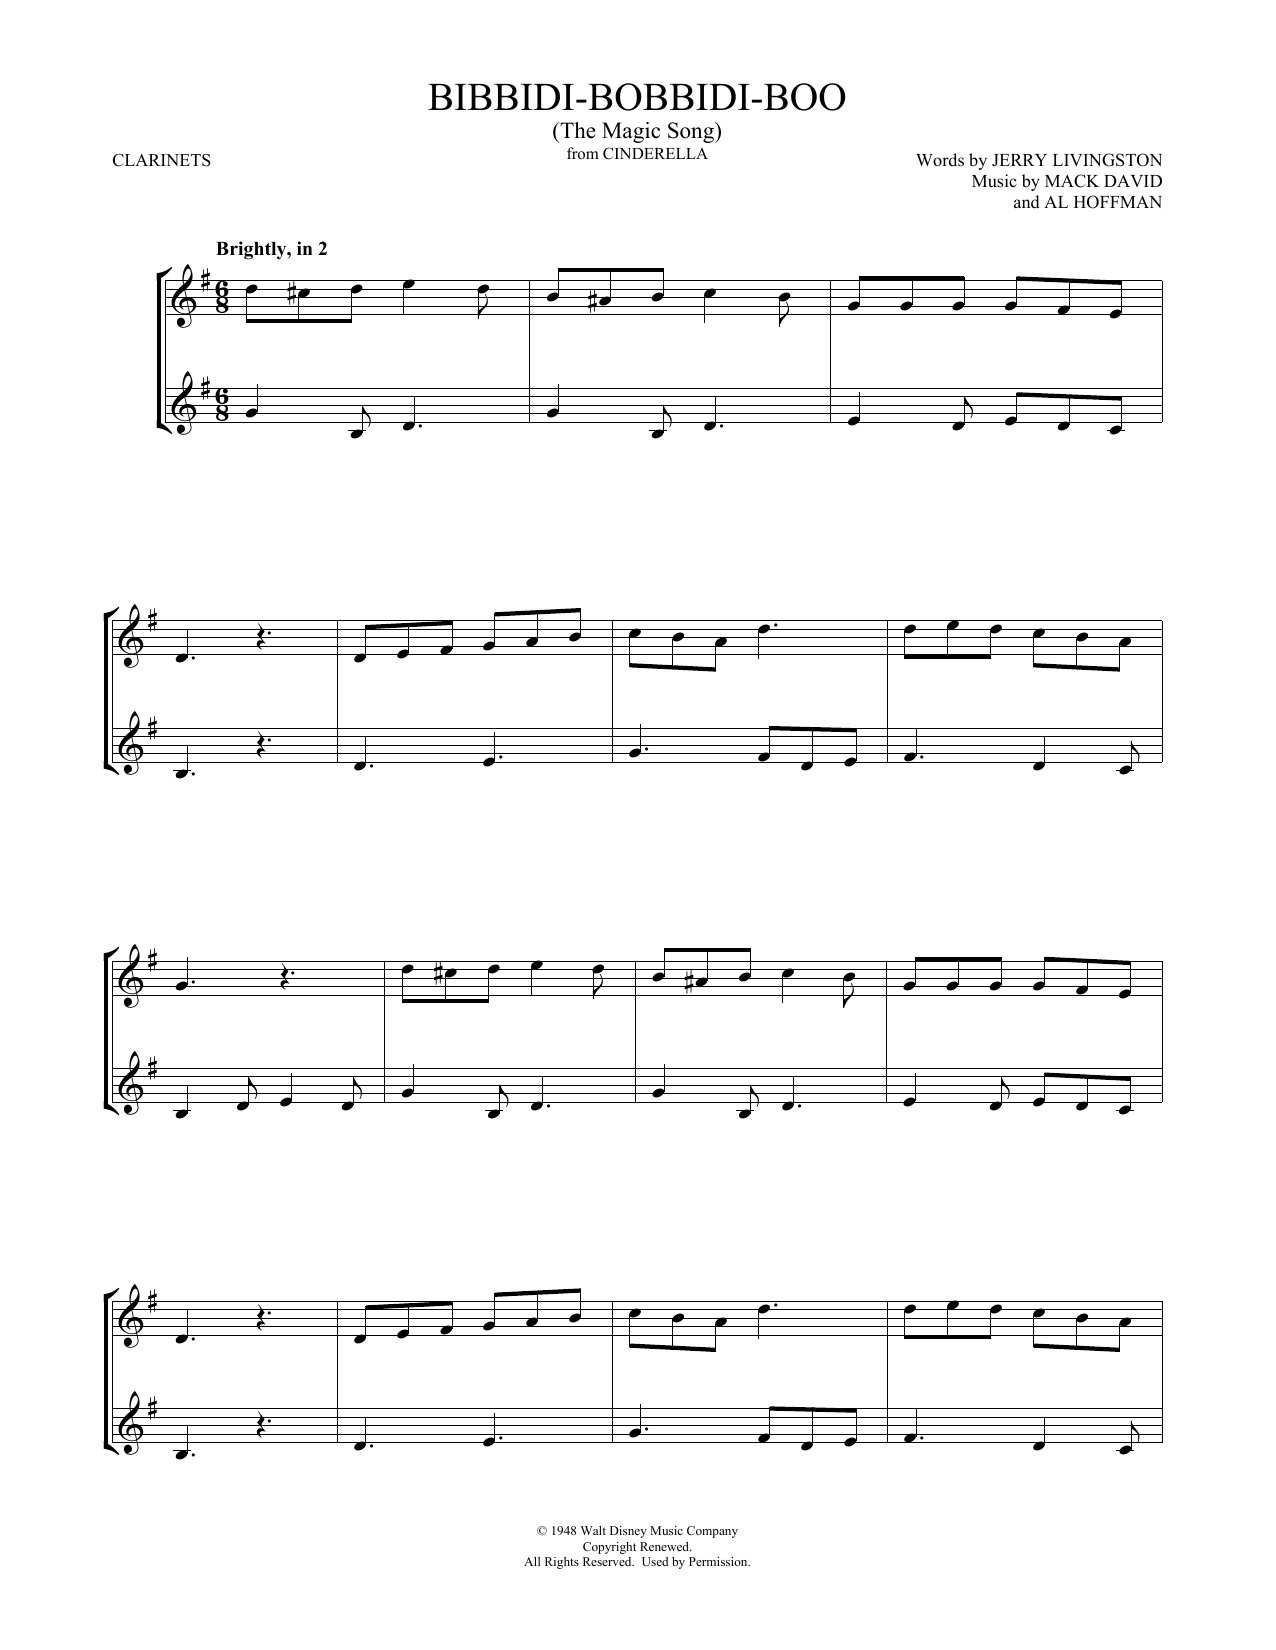 Verna Felton Bibbidi-Bobbidi-Boo (The Magic Song) (from Cinderella) Sheet Music Notes & Chords for Trombone Duet - Download or Print PDF